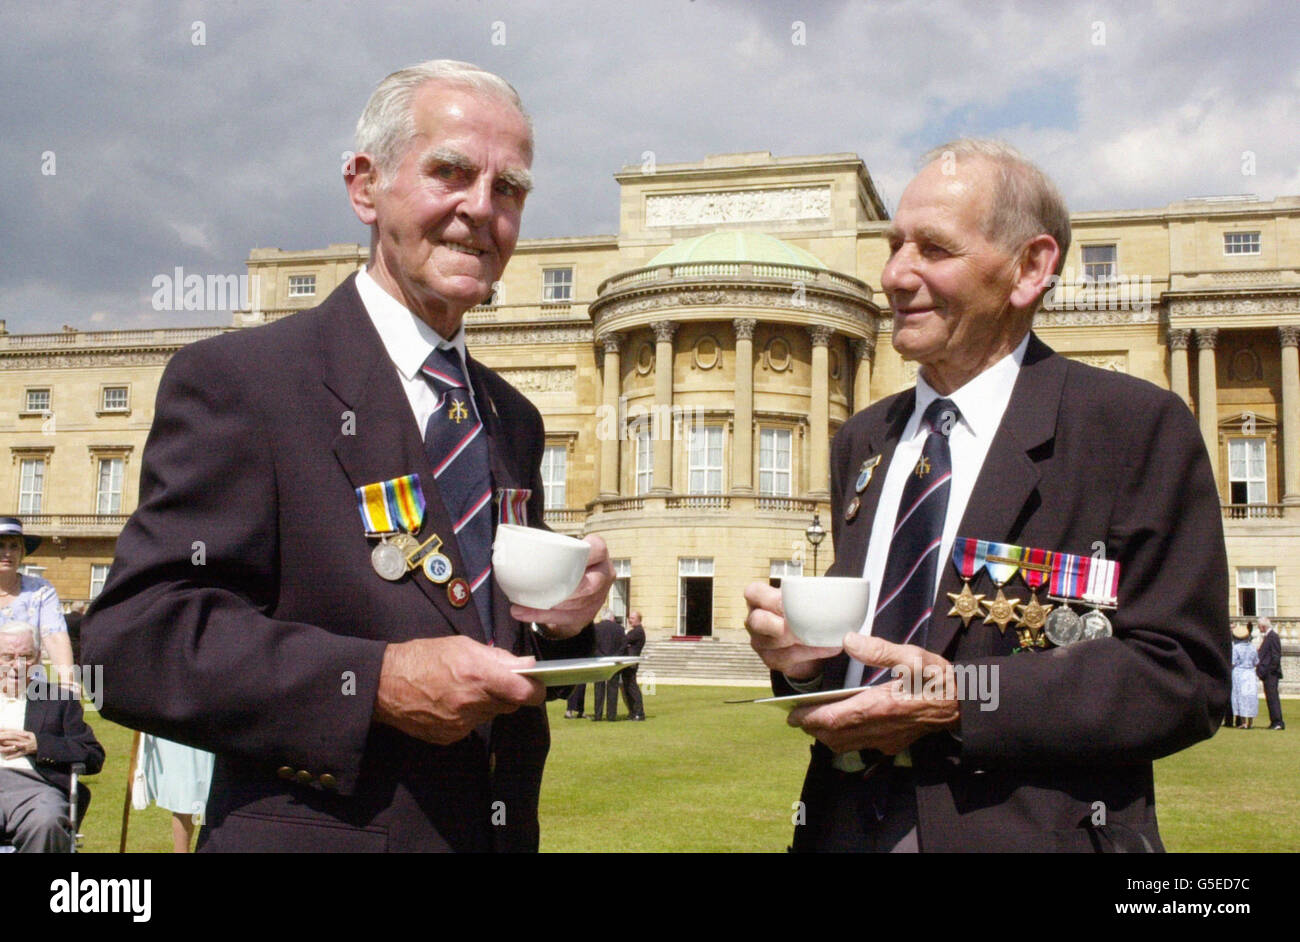 Military - 'Not Forgotten' Association Garden Party - Walter Chamberlain and Bert Darnell - Buckingham Palace, London Stock Photo